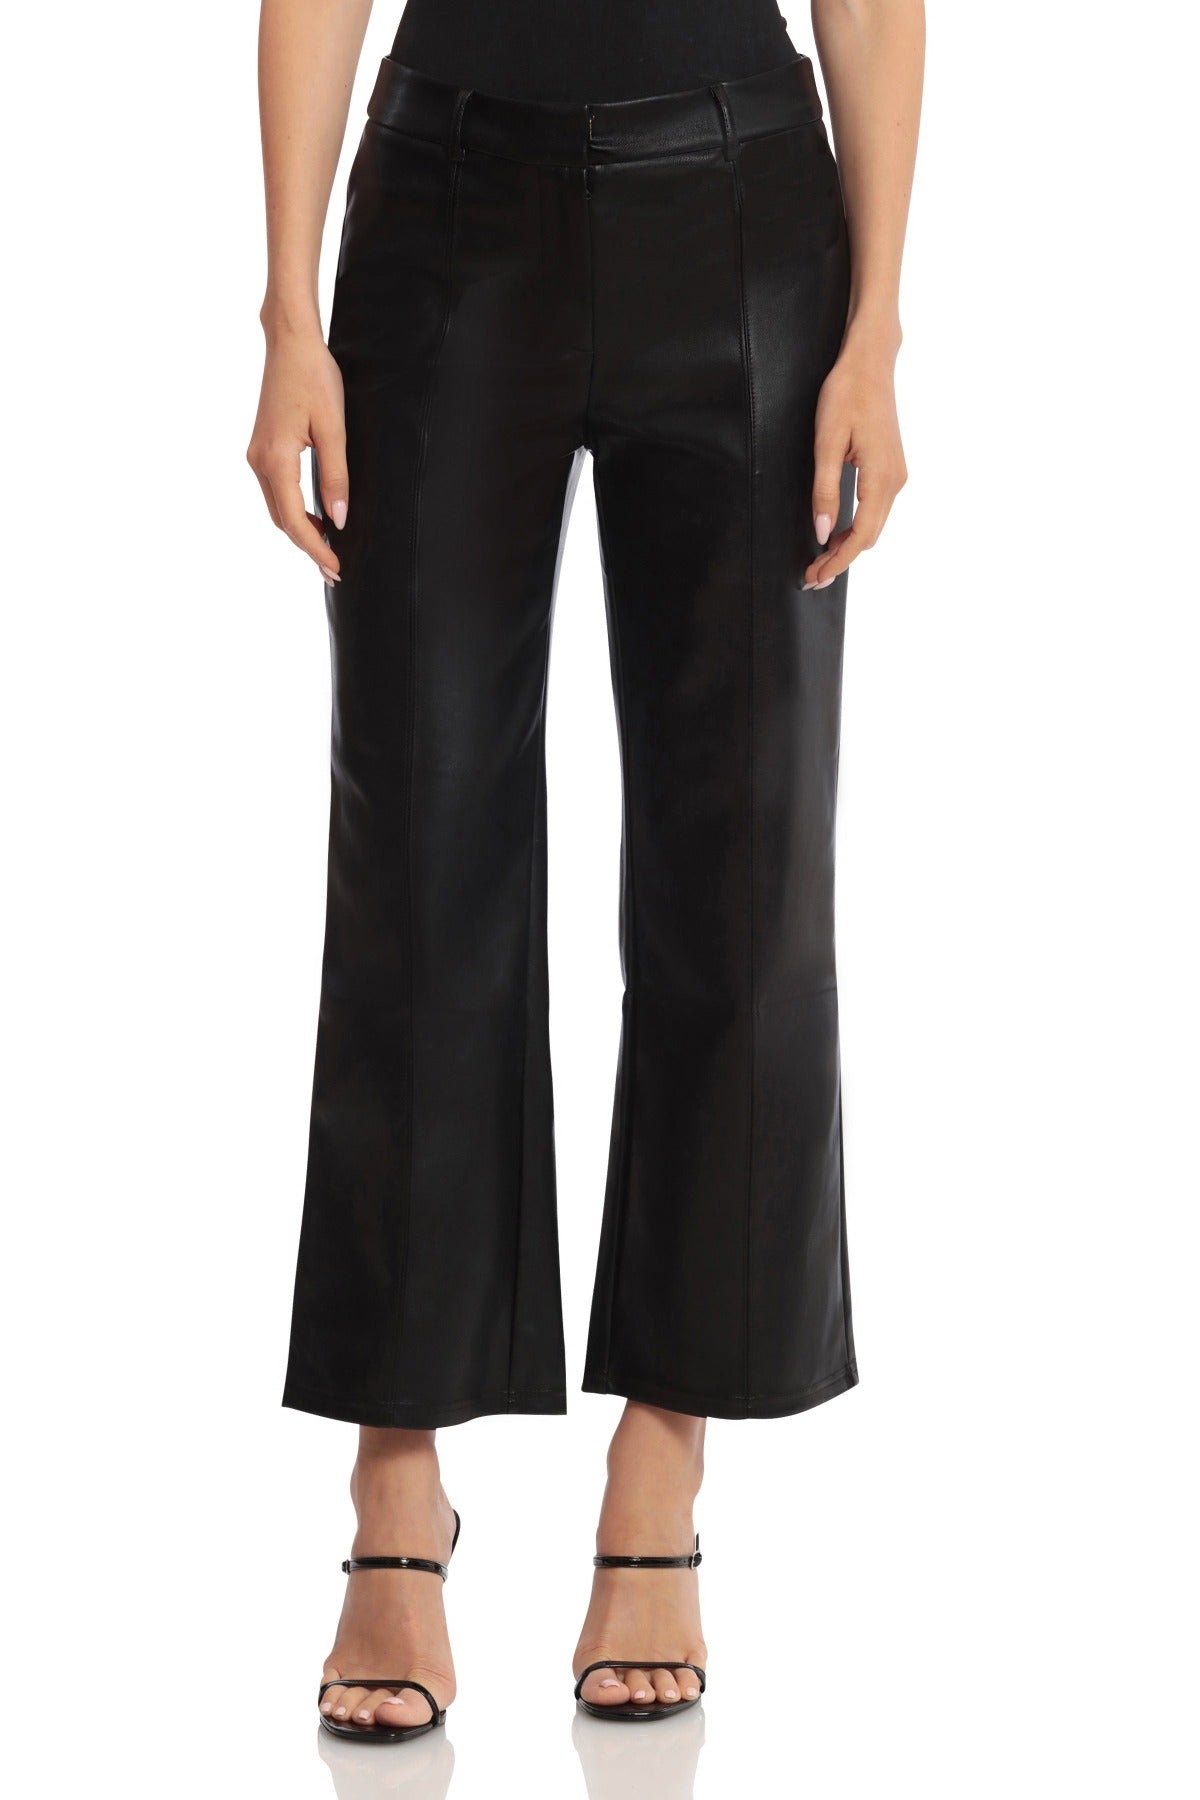 Faux Leather Seam-Front Straight Leg Trouser Pants Black - Women's Figure Flattering Work Appropriate Bottoms Designer Fashion by Avec Les Filles